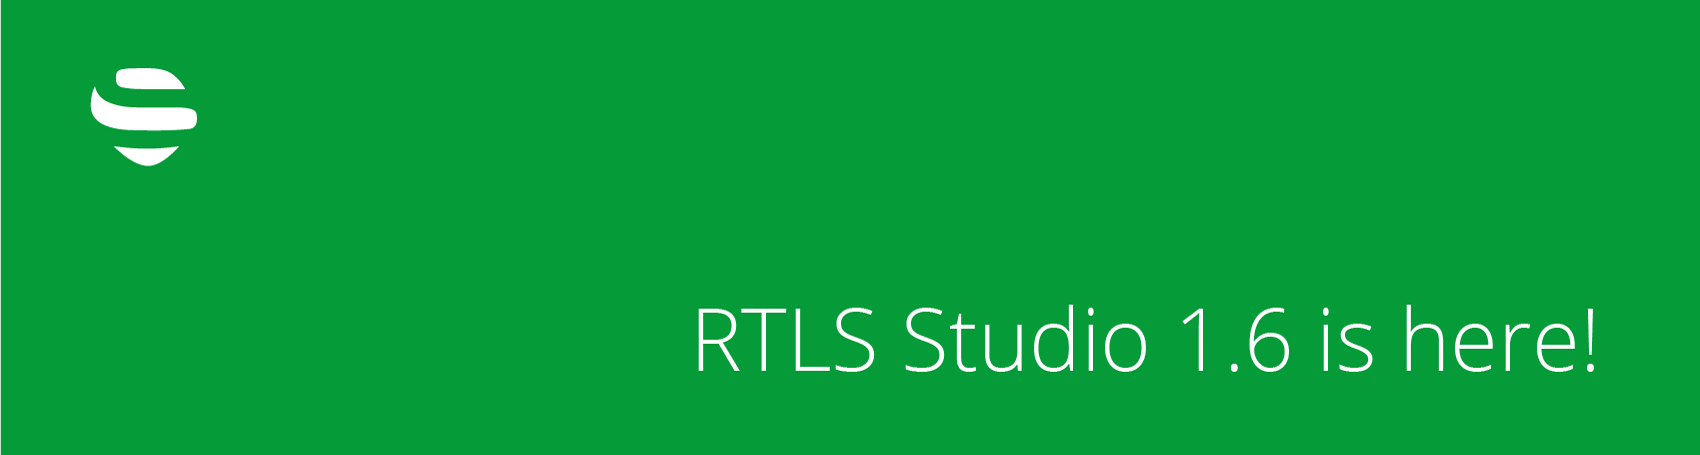 RTLS Studio 1.6 is here!